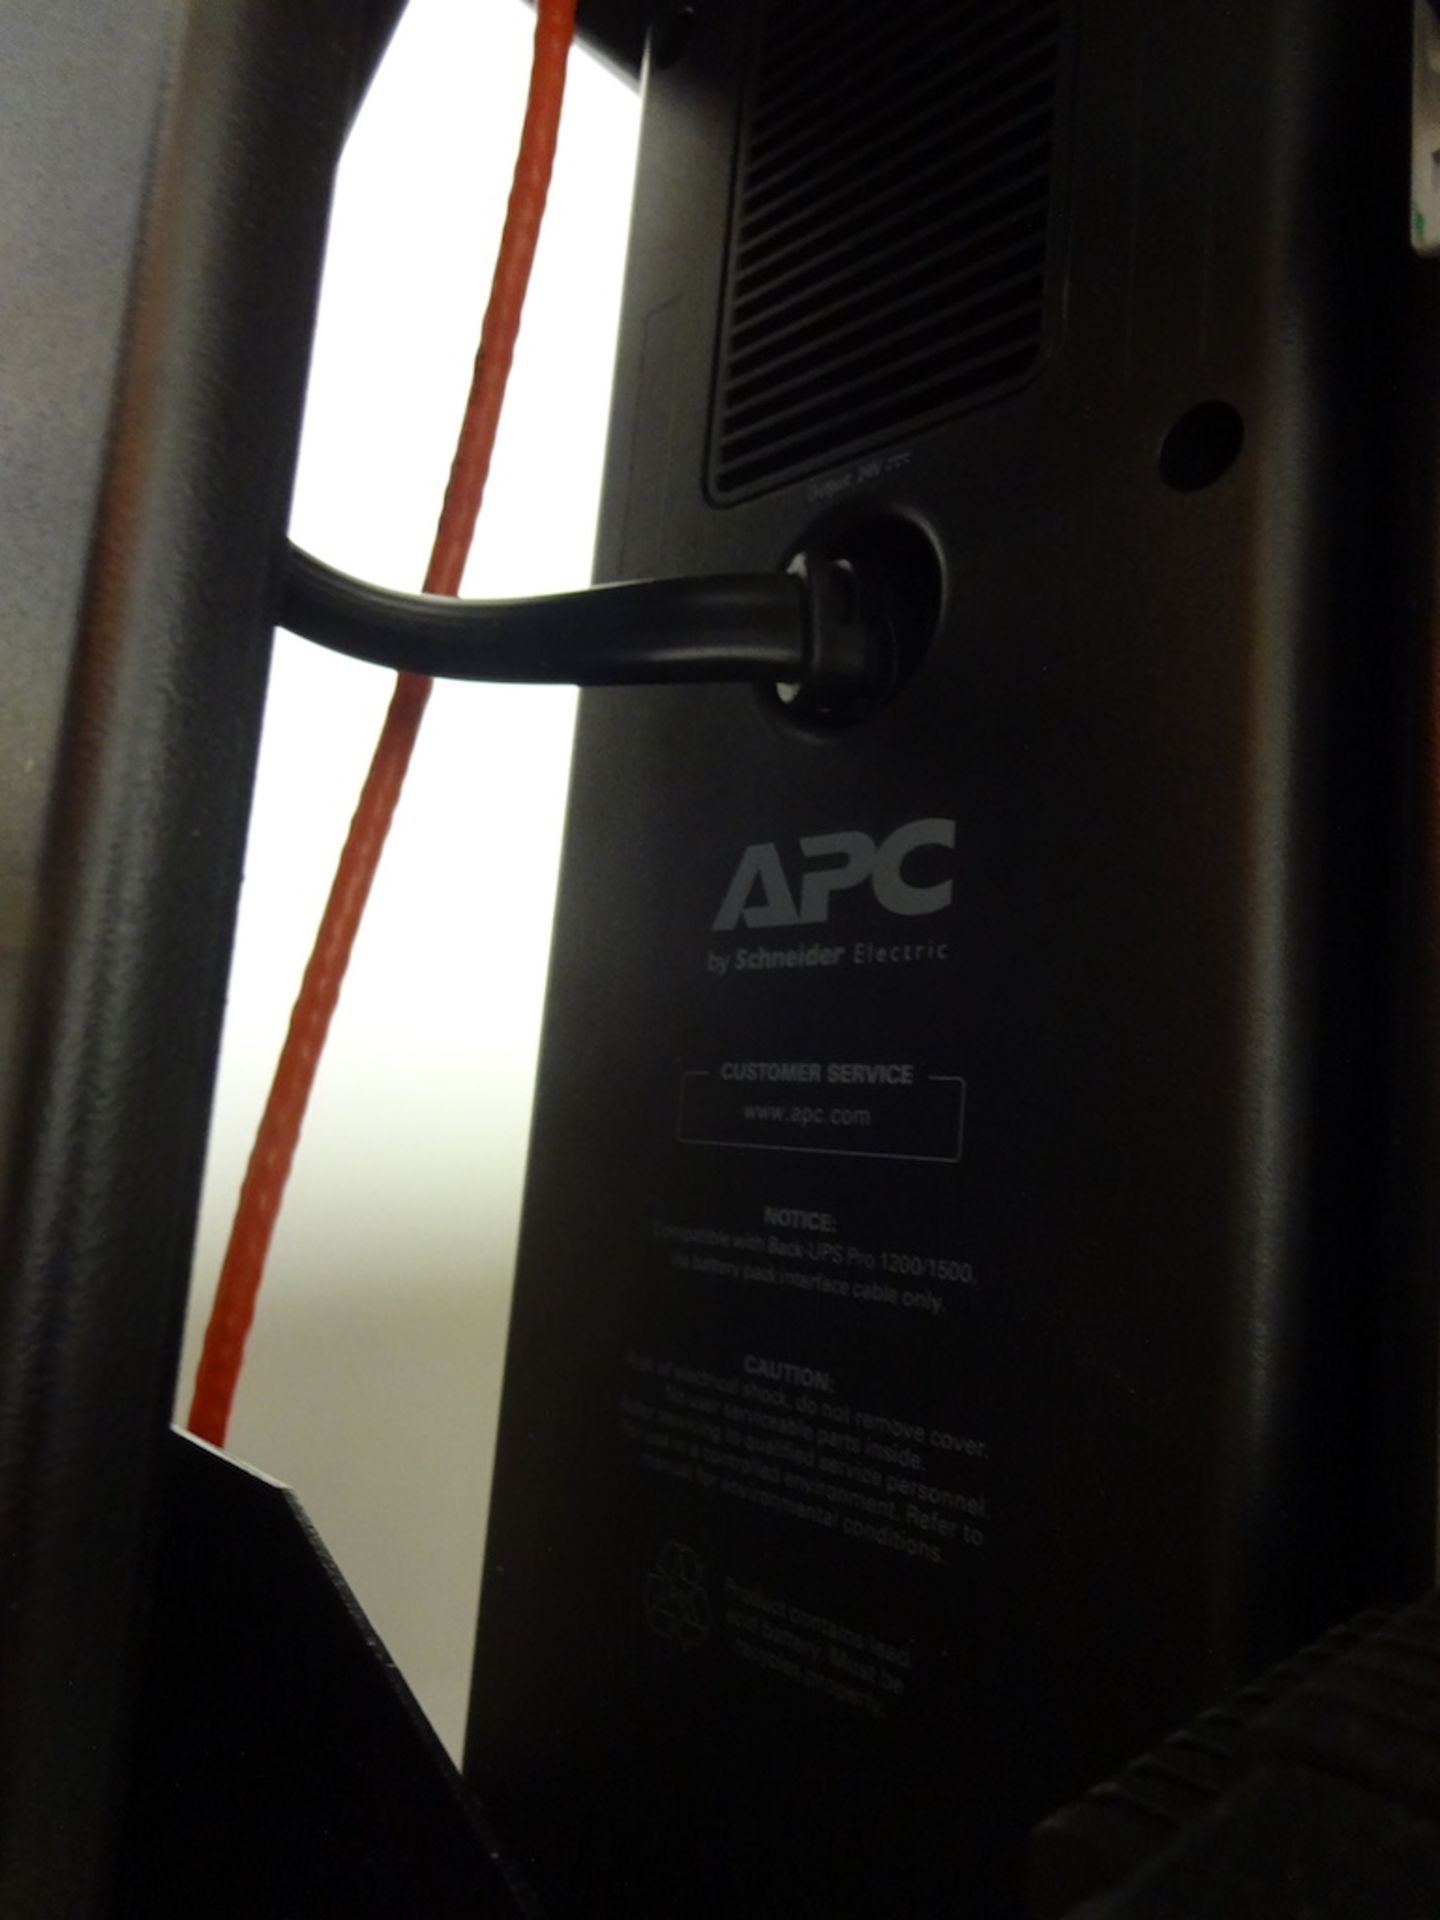 APC Back-UPS Pro 1500 Battery Back-up - Image 2 of 2